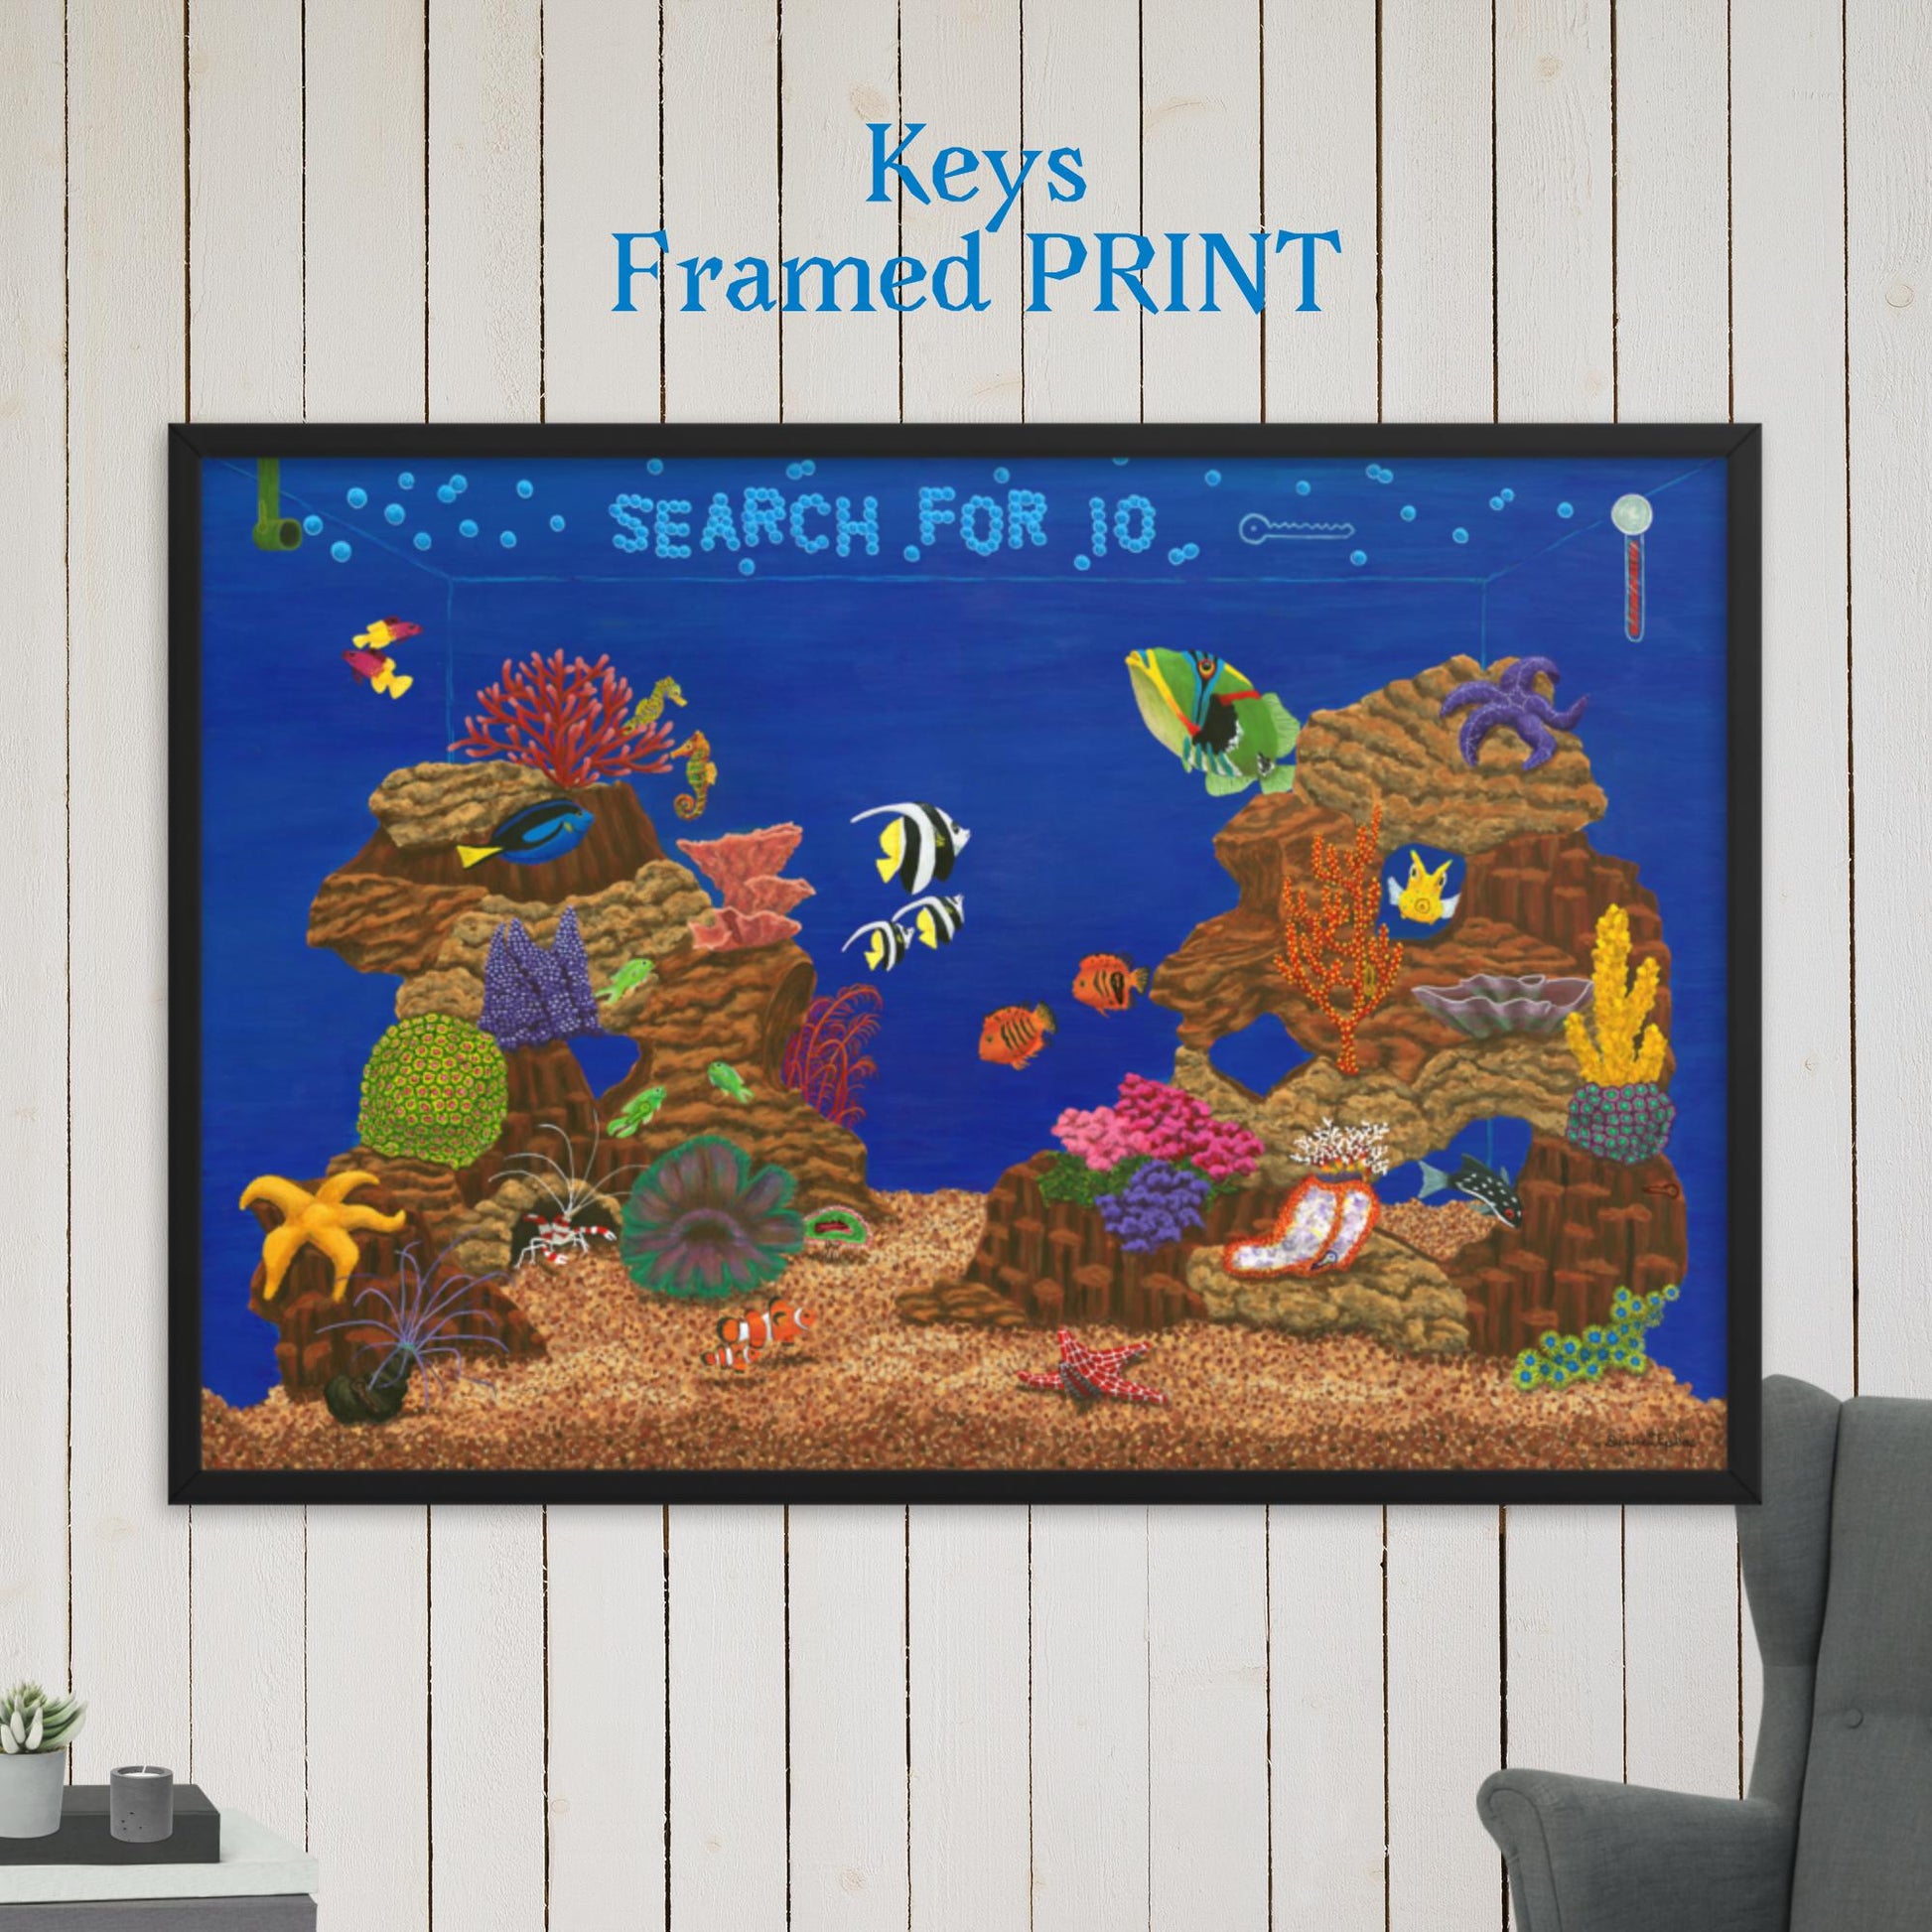 Fish Tank Favorites KEYS 24x36 Framed PRINT Artwork – Search For 10